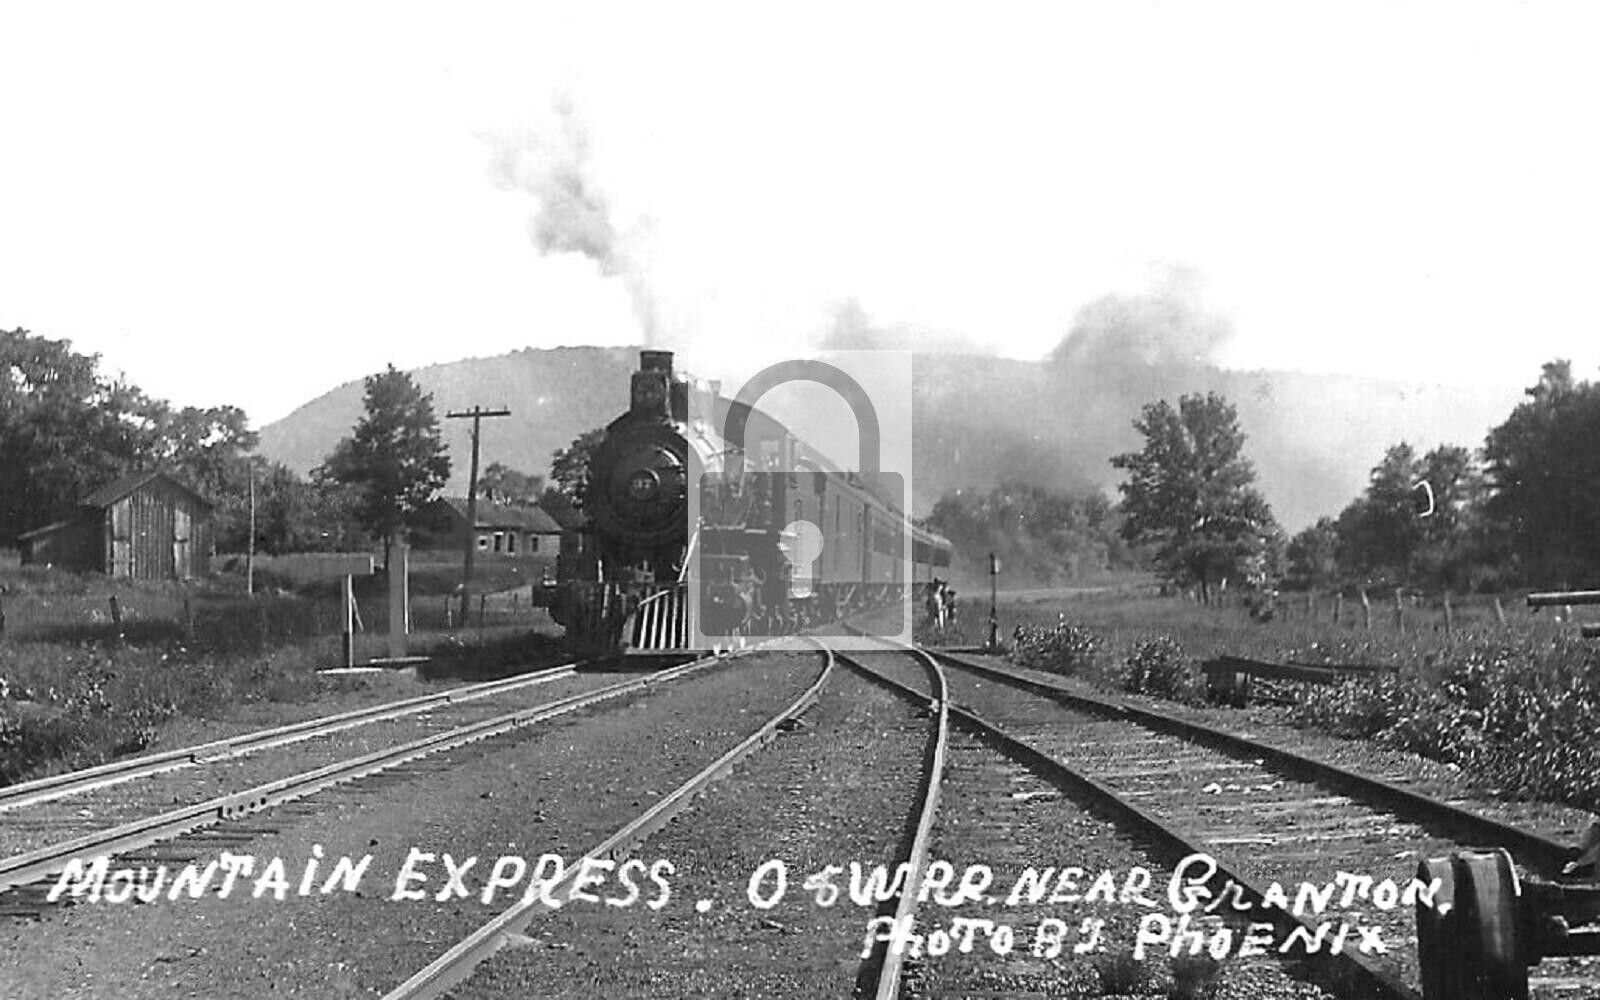 Mountain Express Railroad Train Granton New York NY Reprint Postcard